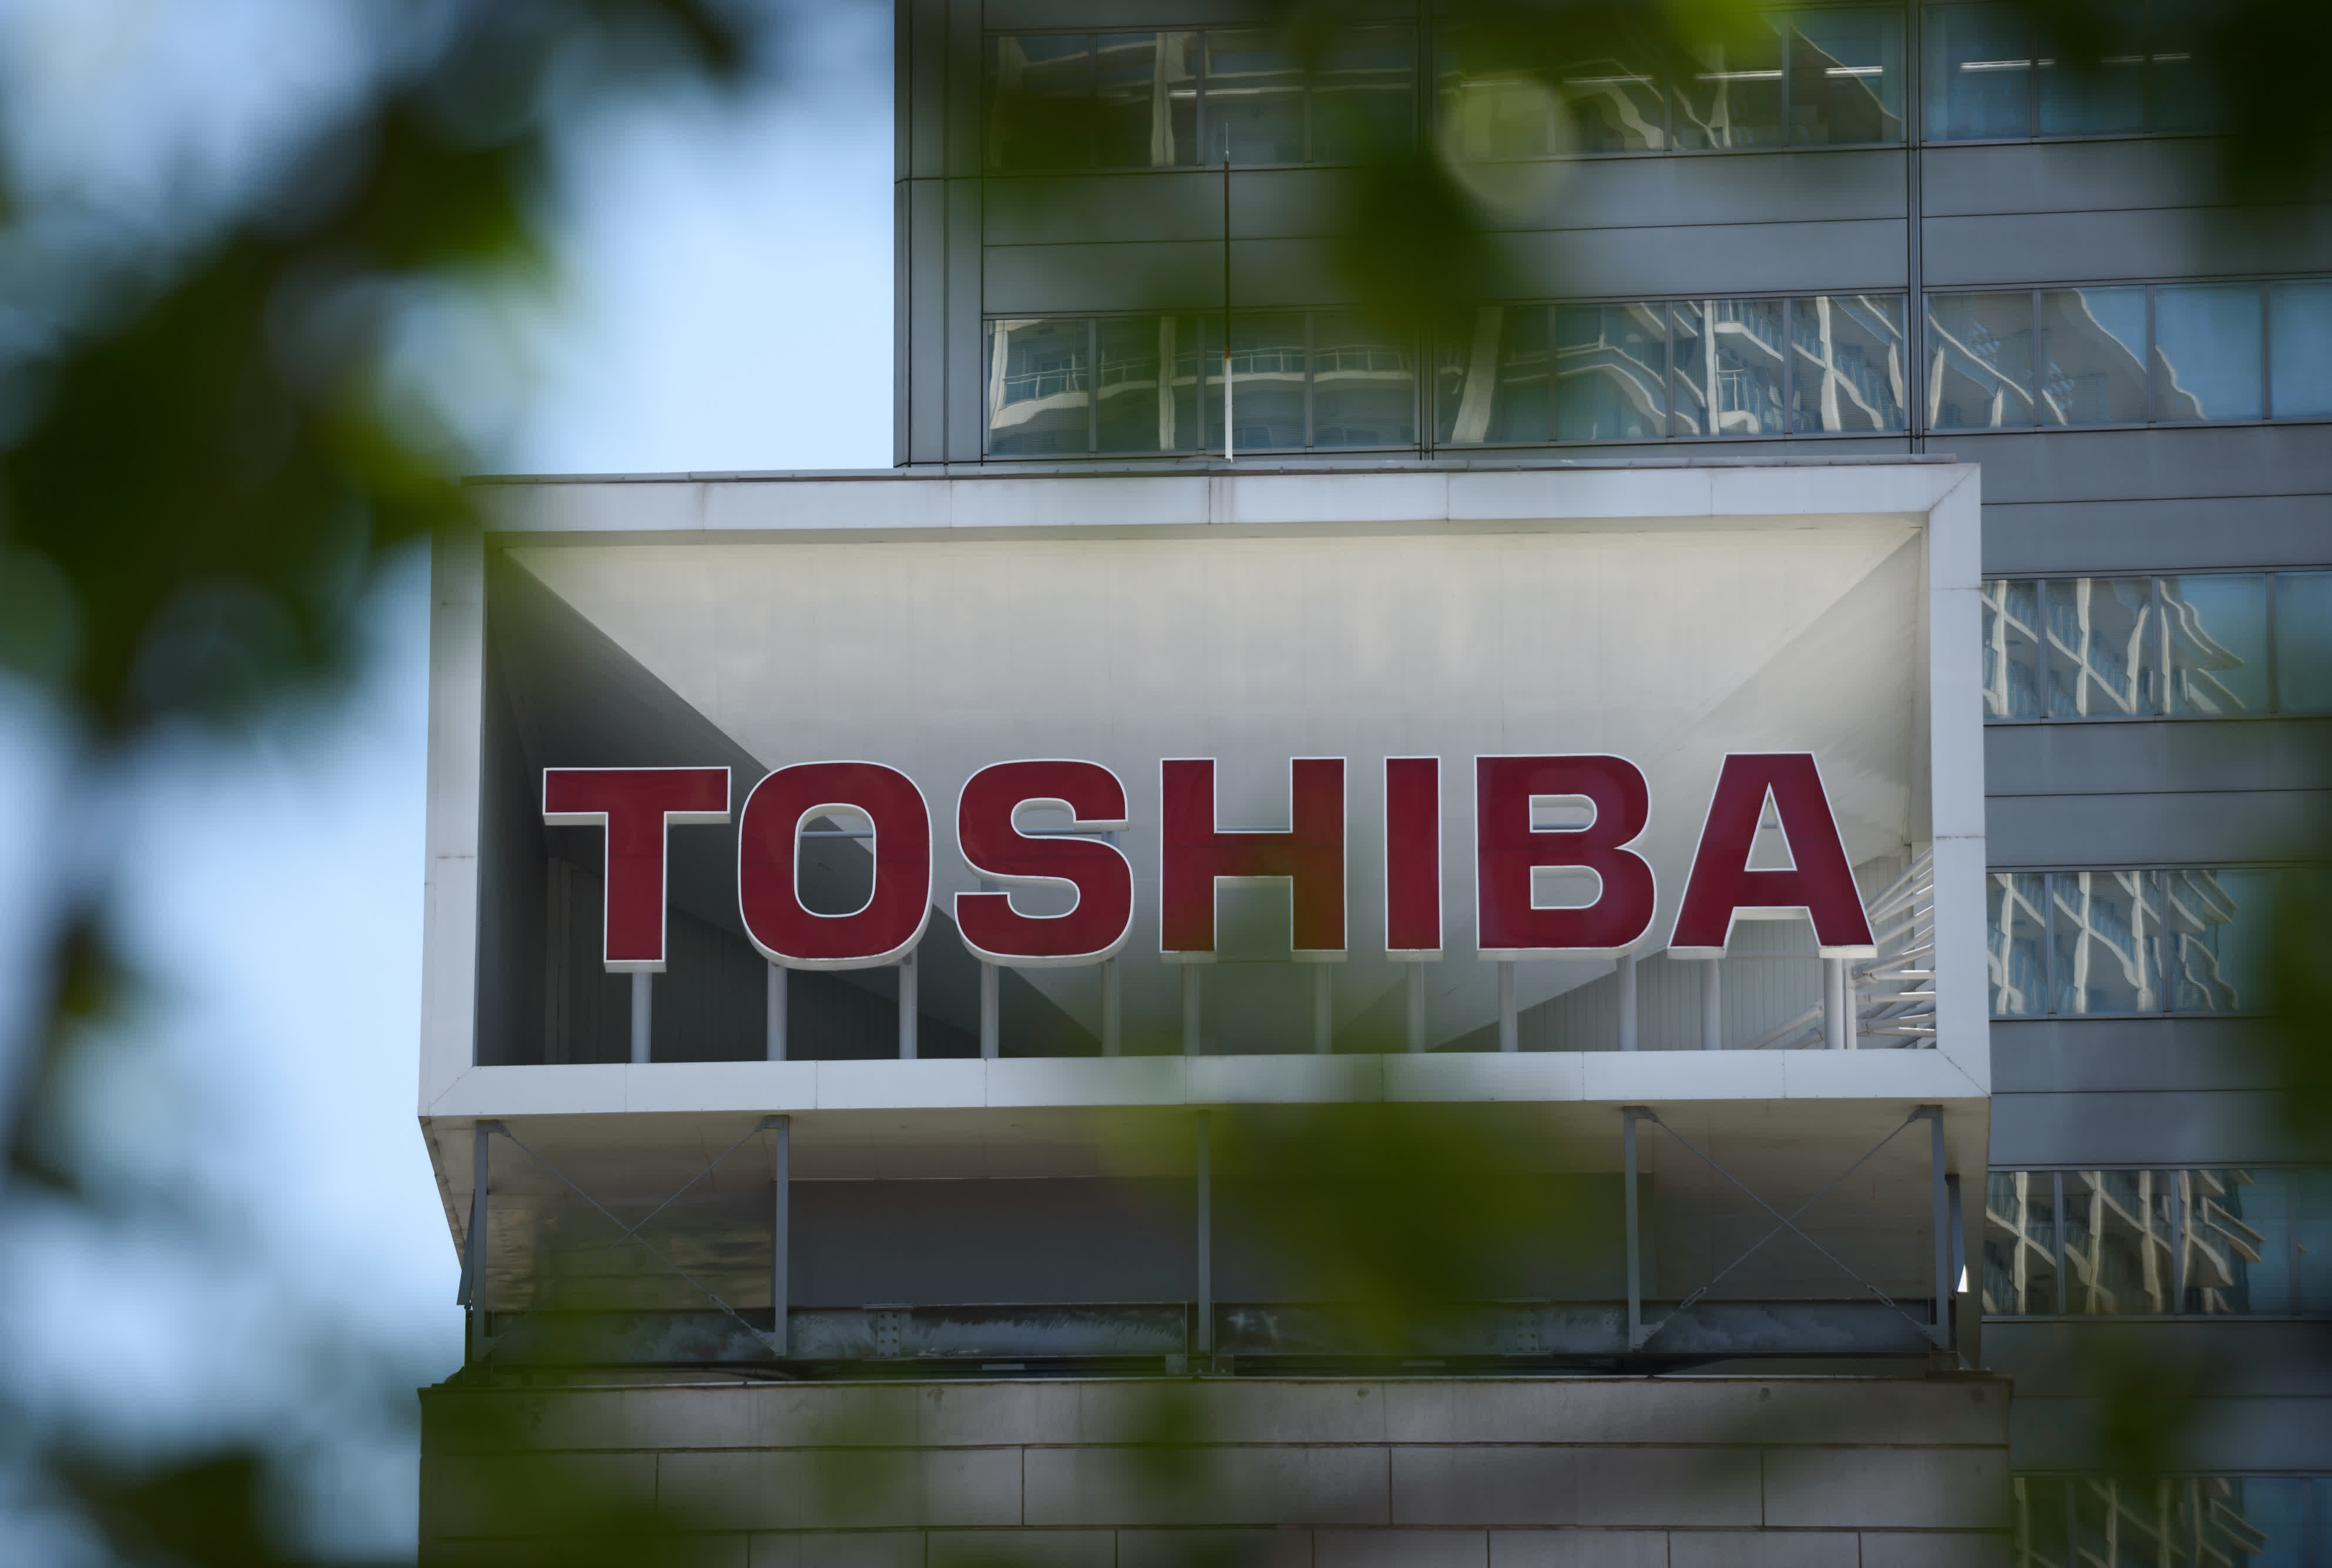 Toshiba says it will split into three companies following shareholder pressure